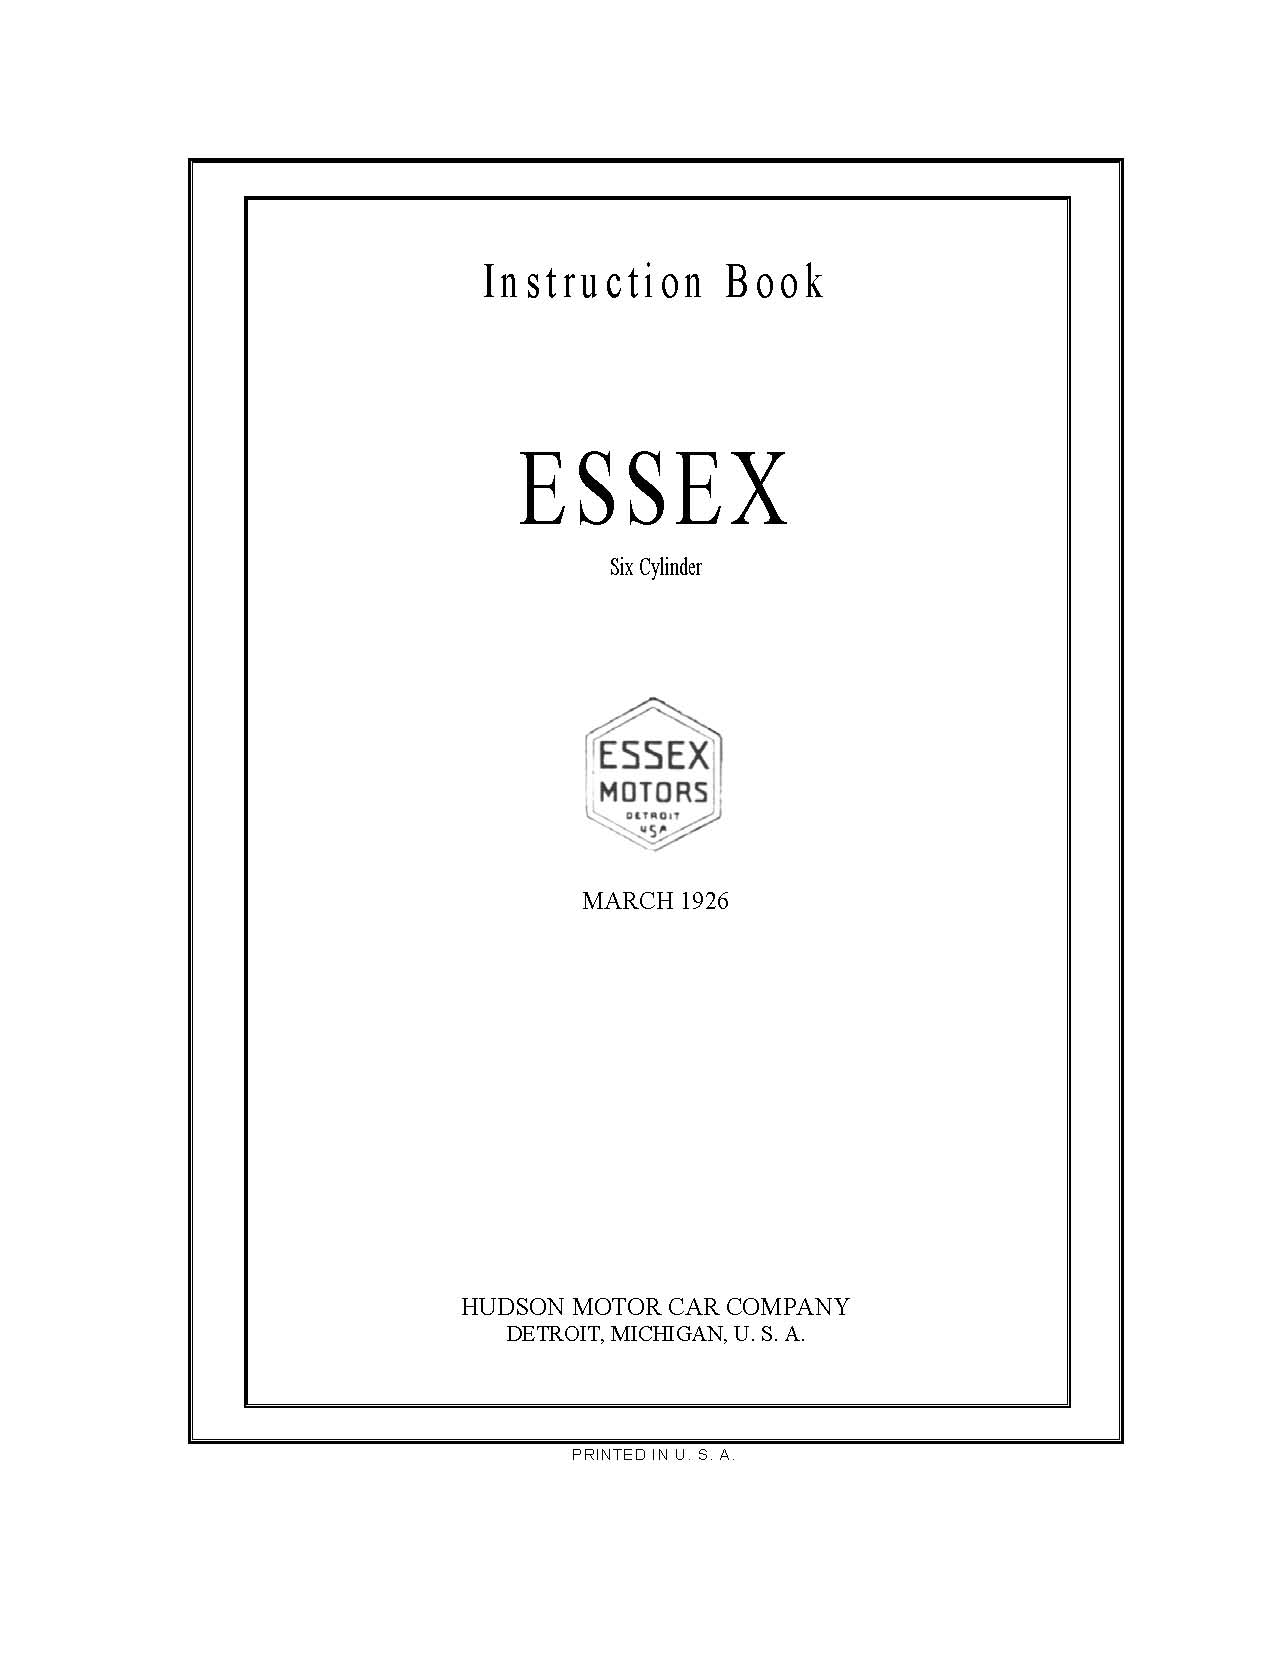 1926 Essex Instruction Book